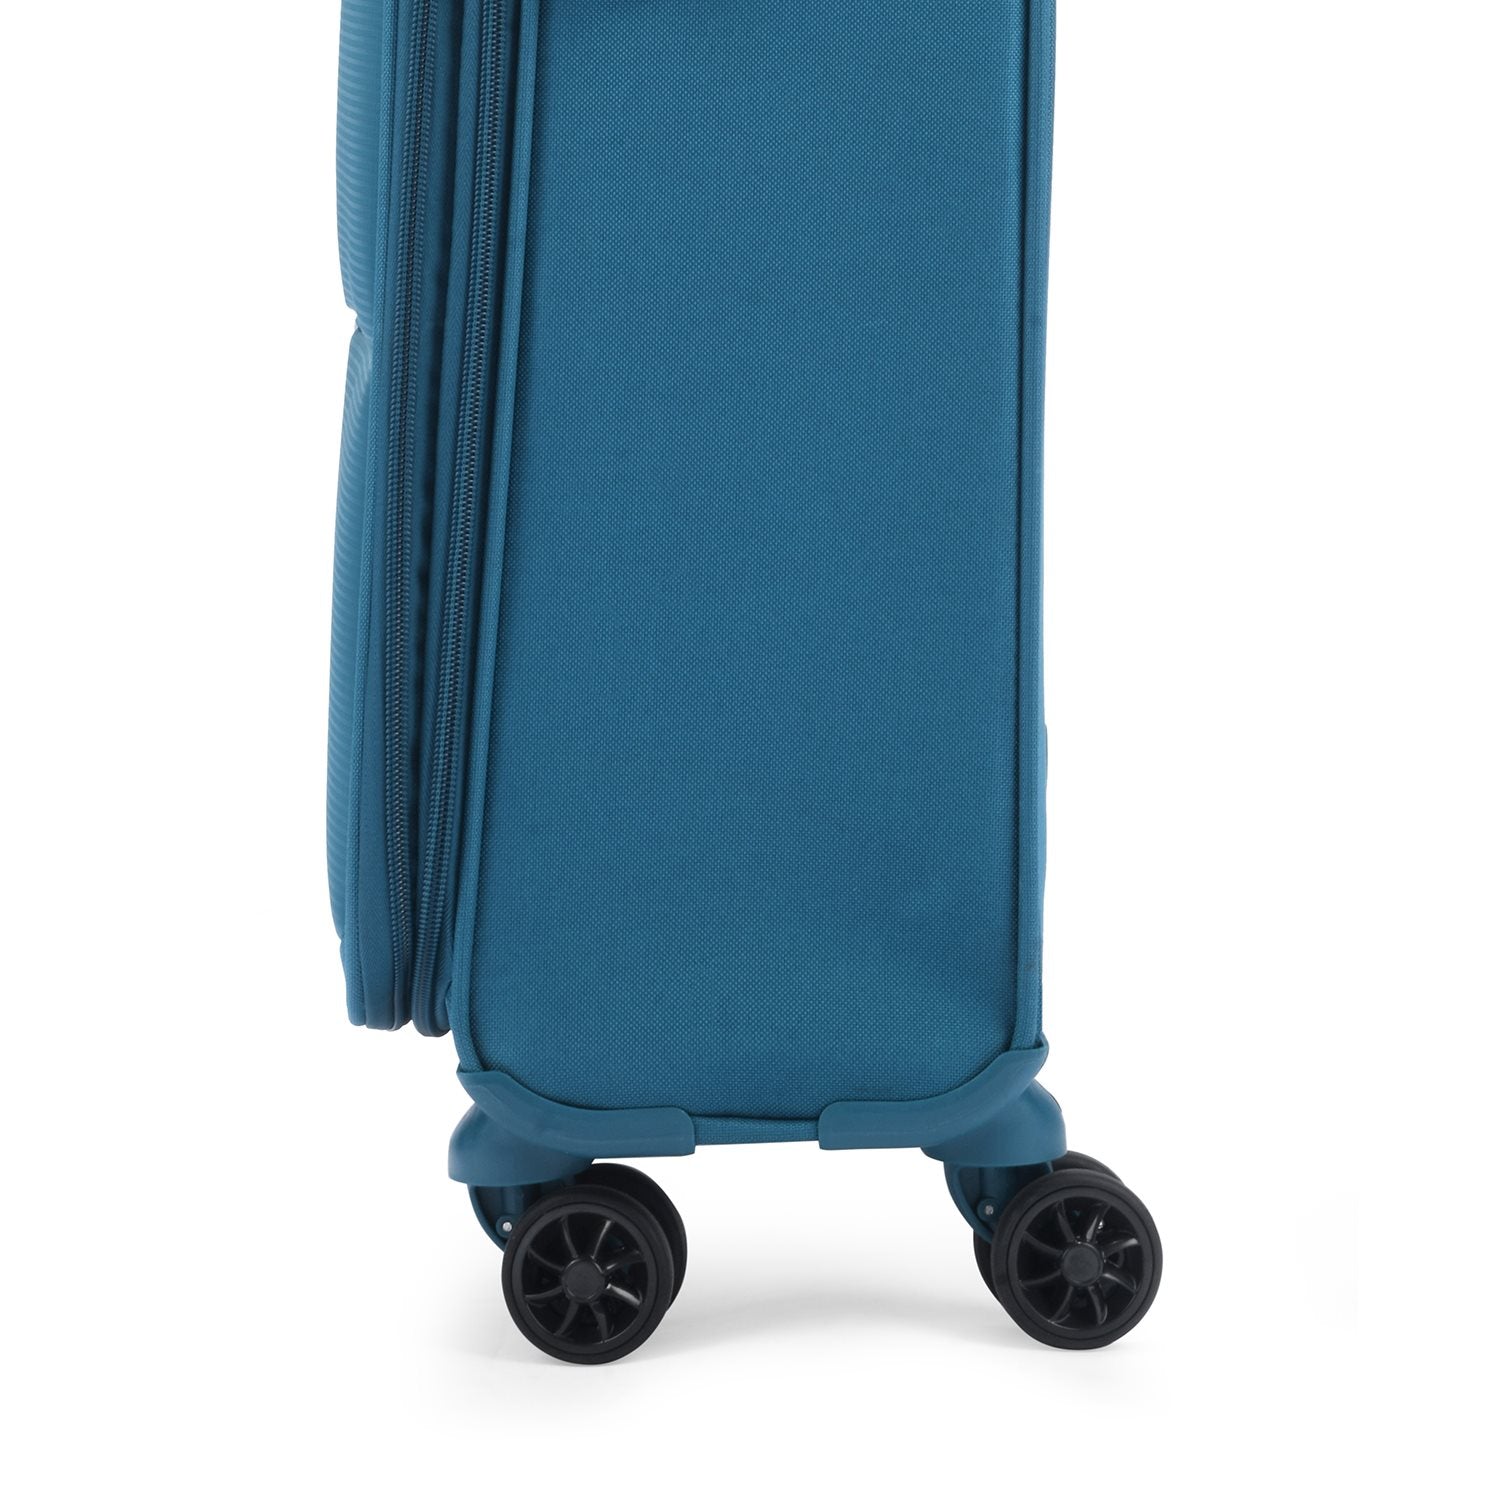 Carlton Newburry Plus - Handbagage Koffer - 55 cm - Teal Handbagage Koffer - Reisartikelen-nl